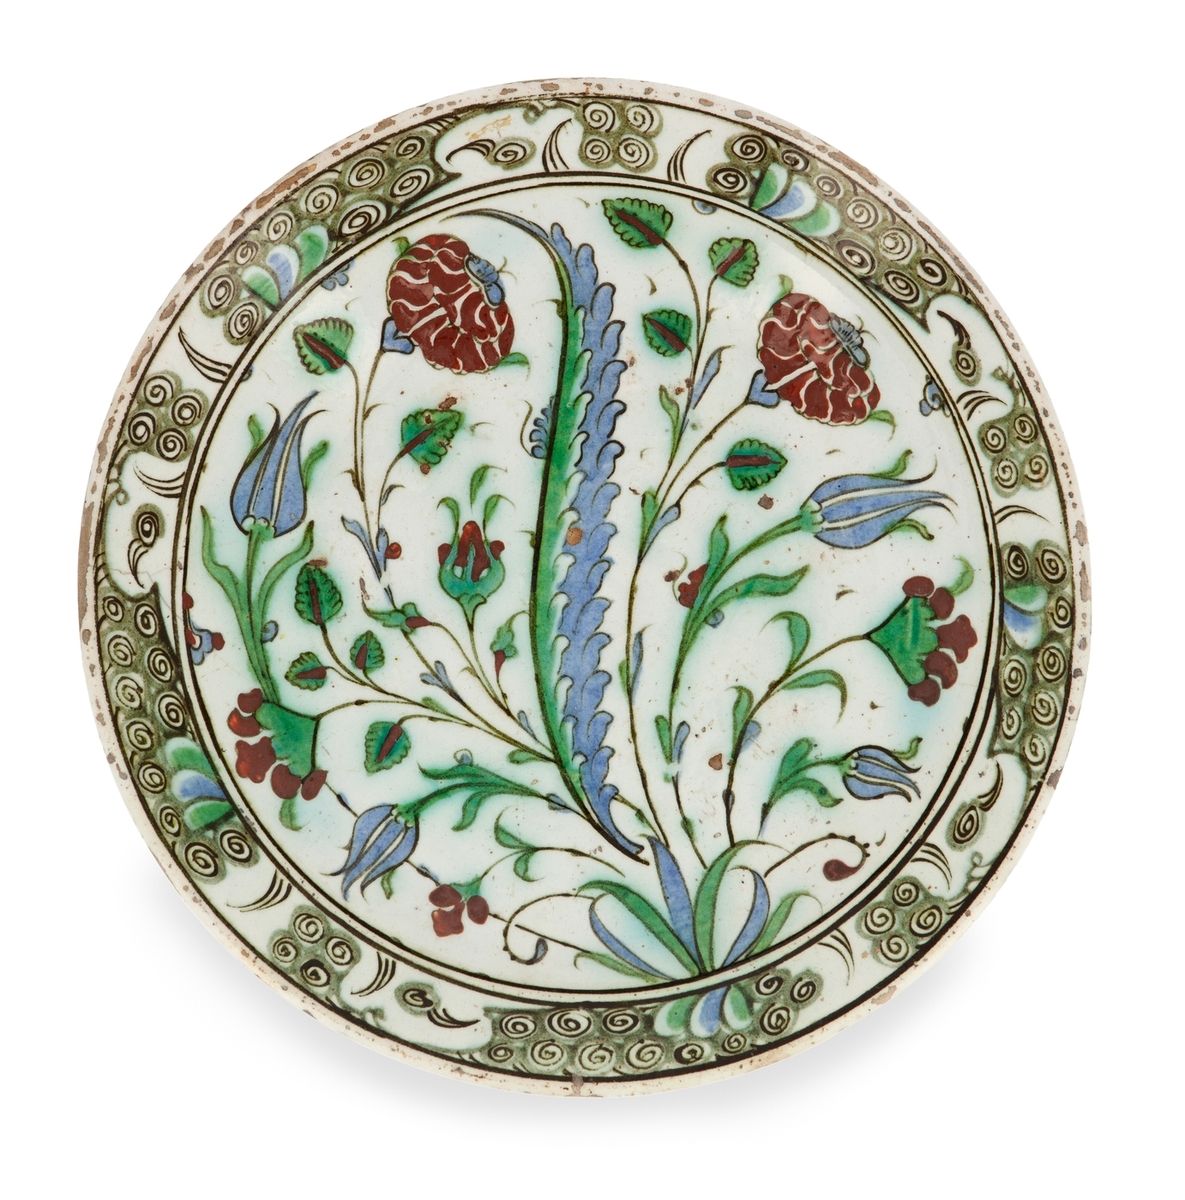 Null Osmanischer Tabak mit Blumen
Iznik, Türkei, 17.
Platte aus Silikatkeramik m&hellip;